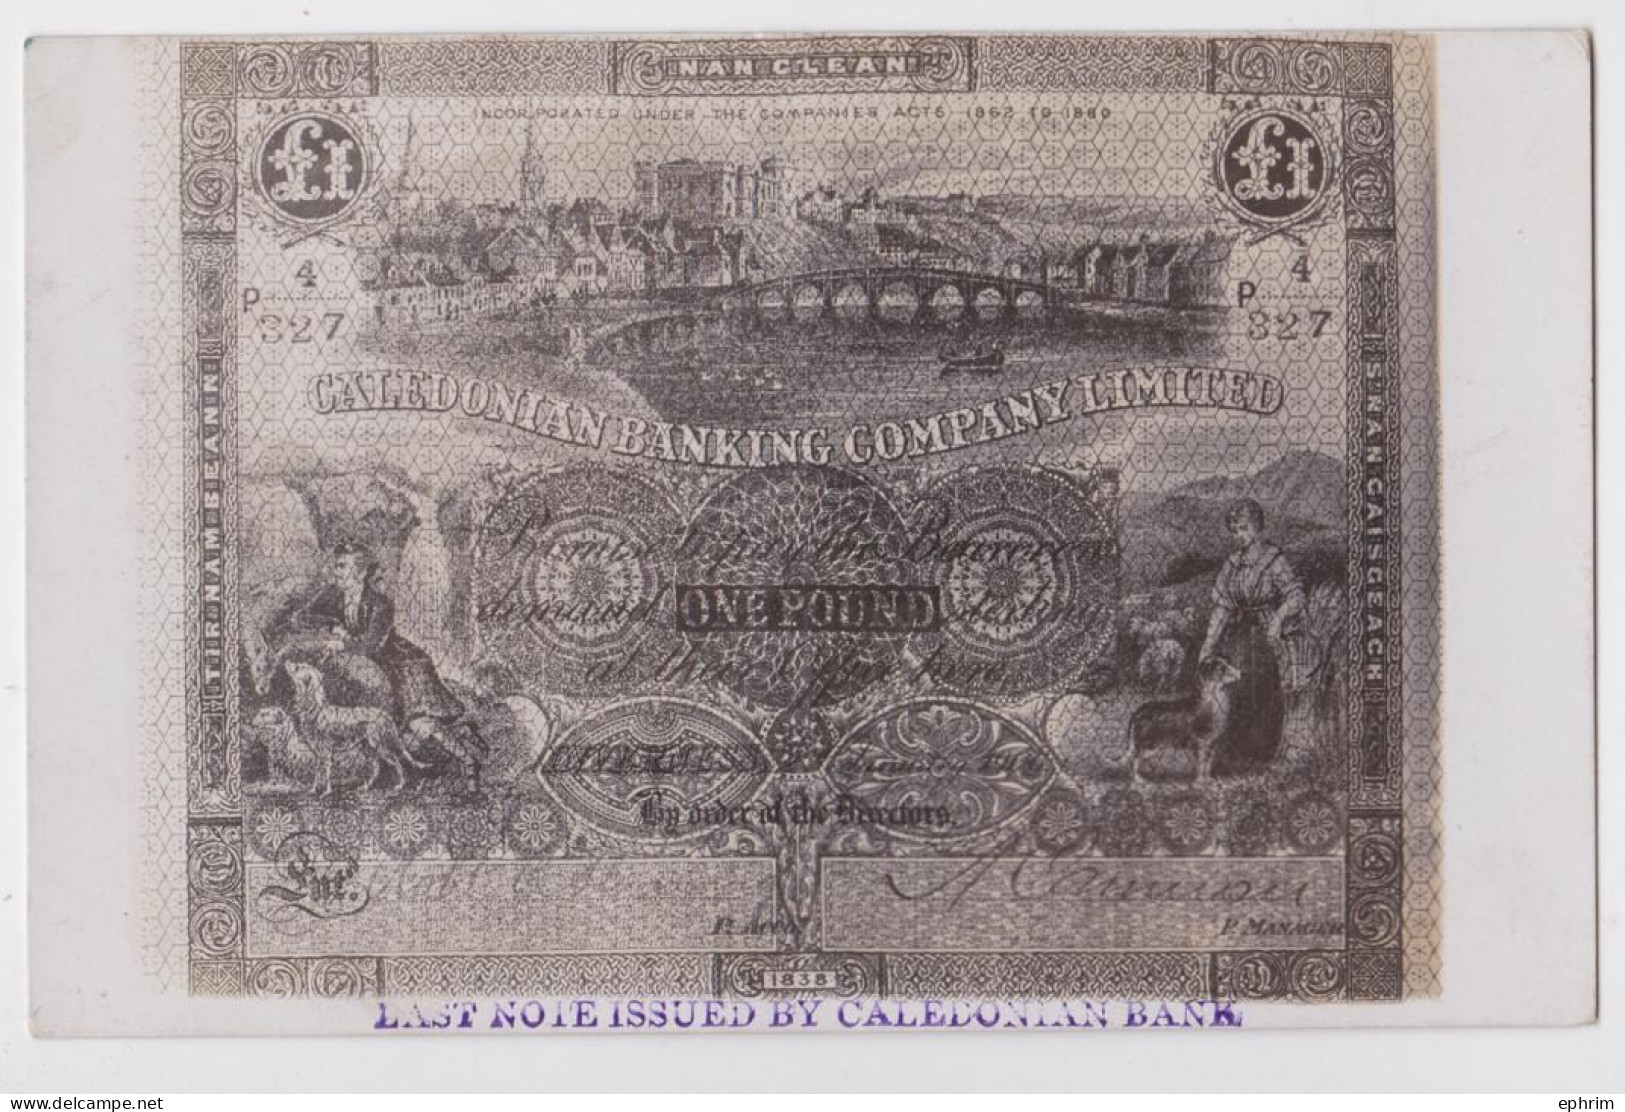 Last Note Issued By Caledonian Bank Banknote On Postcard Inverness Scotland Billet De Banque Sur Carte Postale 1907 - Inverness-shire